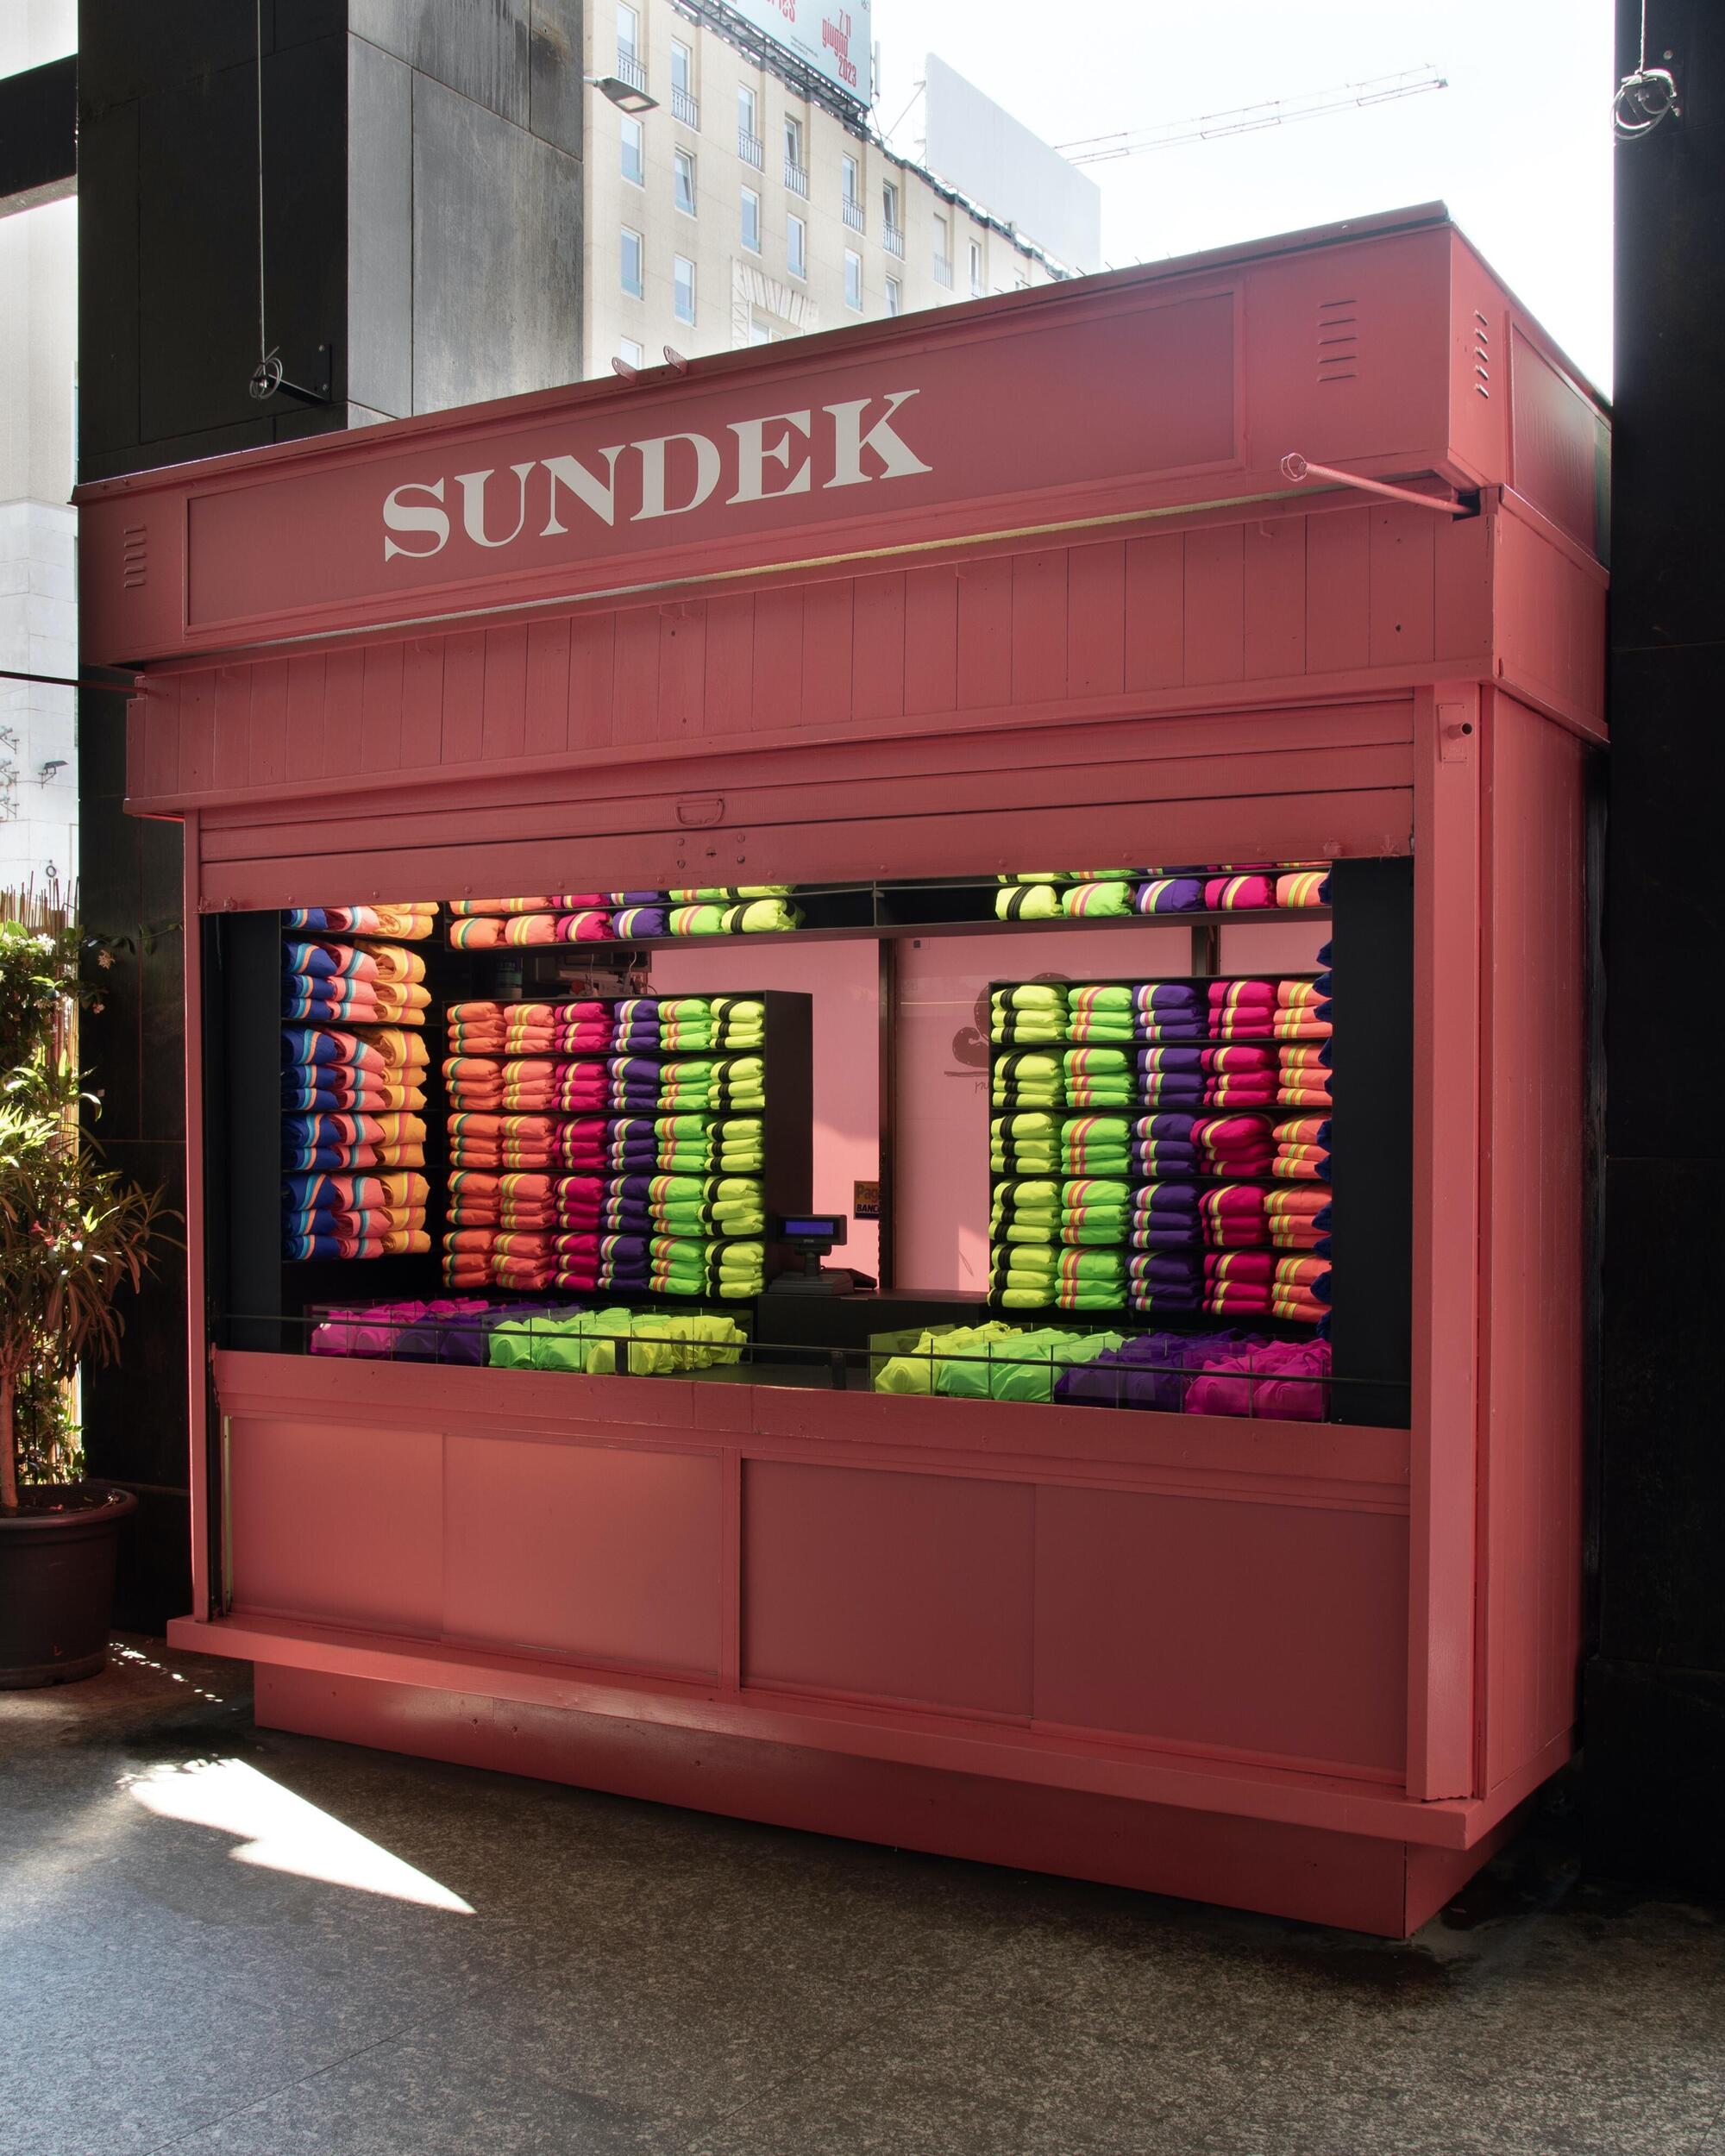 Il temporary store Sundek in piazza San Babila 5 a Milano